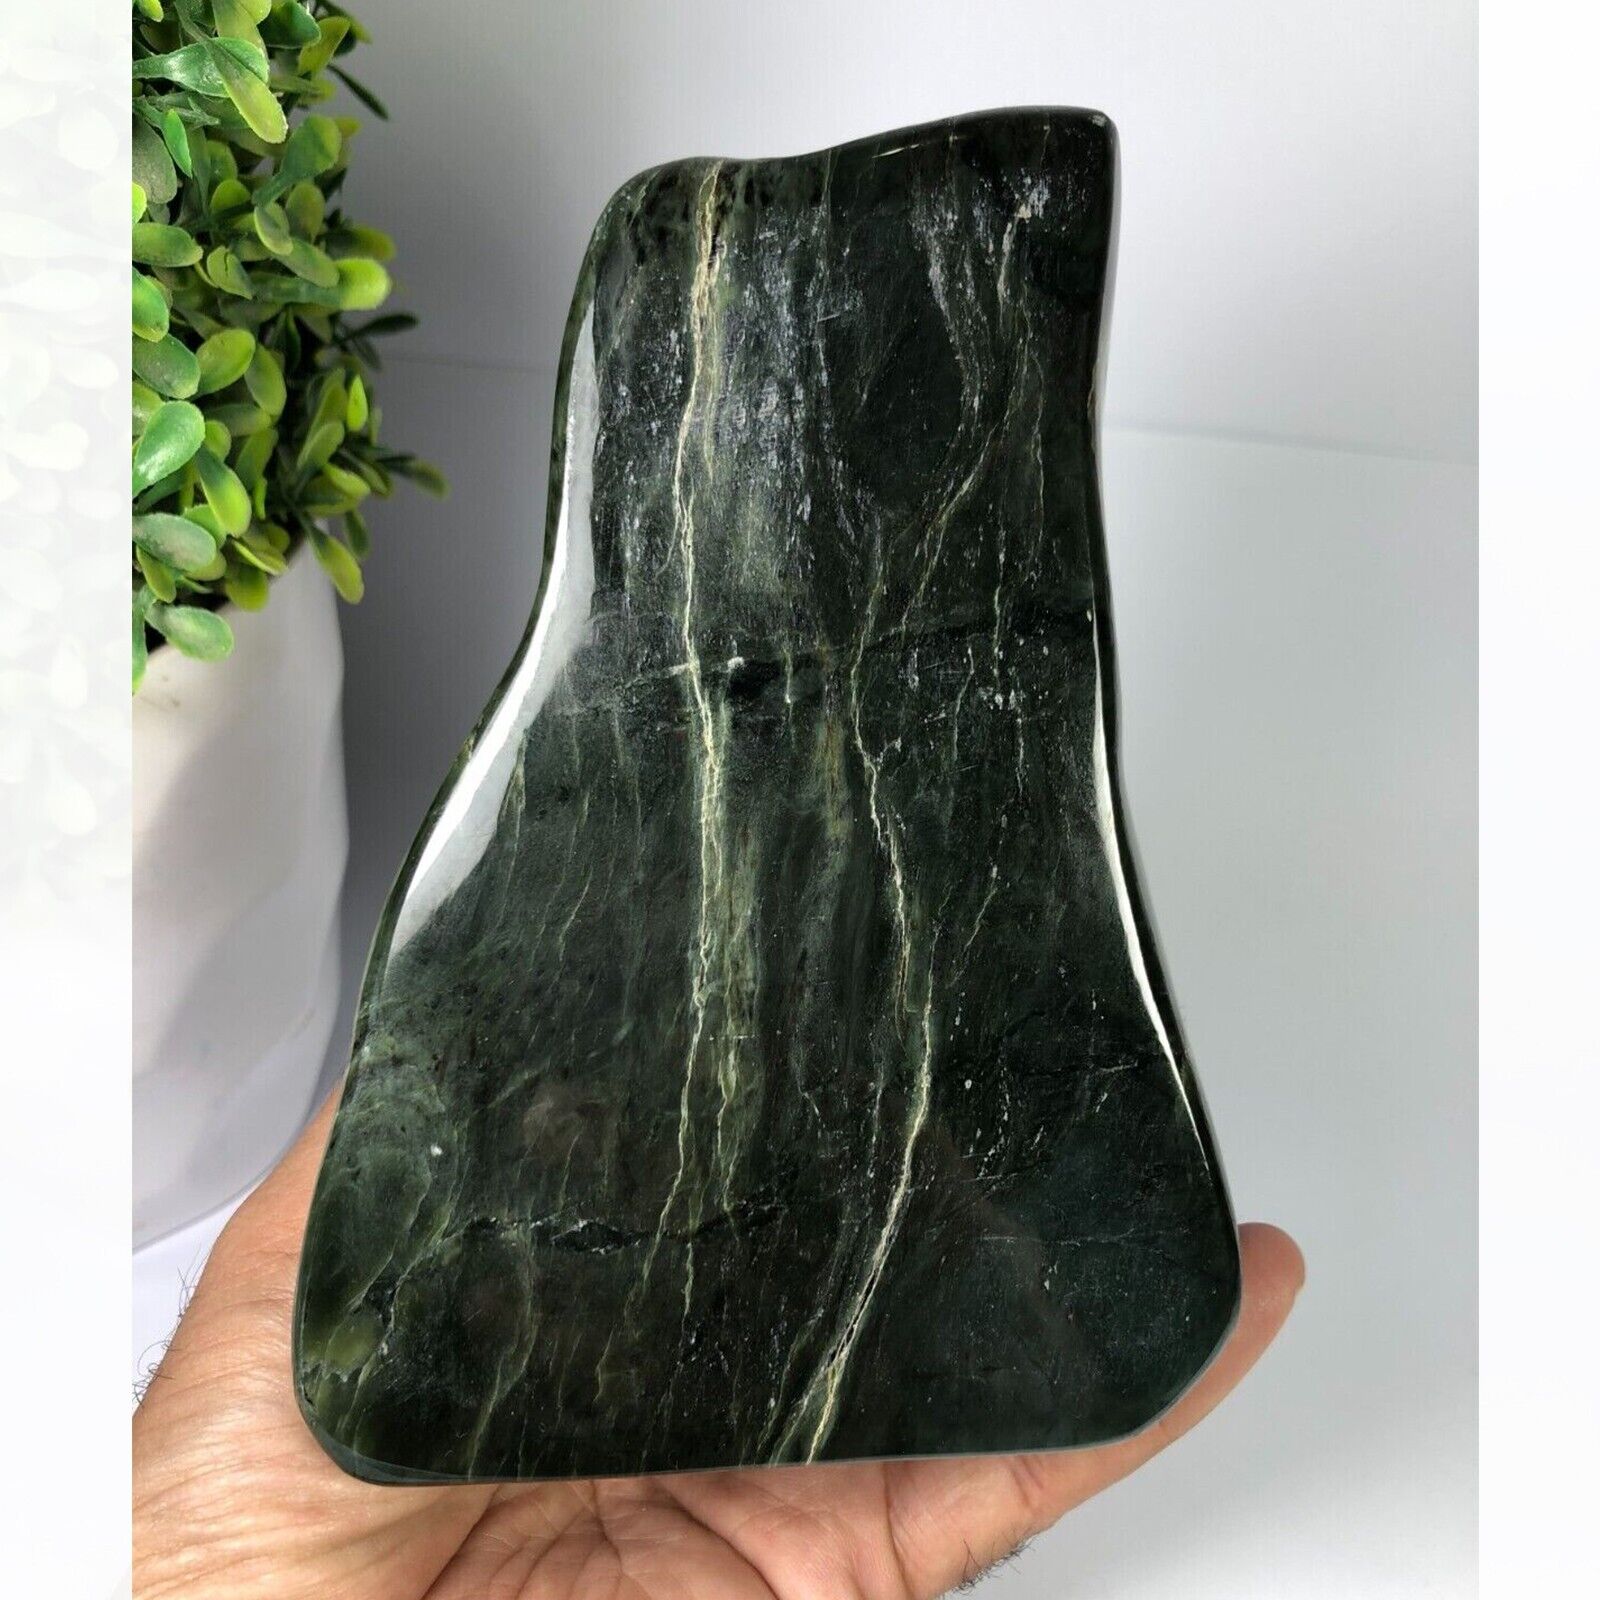 1288 Gram Nephrite Jade Rough Polished Stone Tumble Natural Freeform Crystal